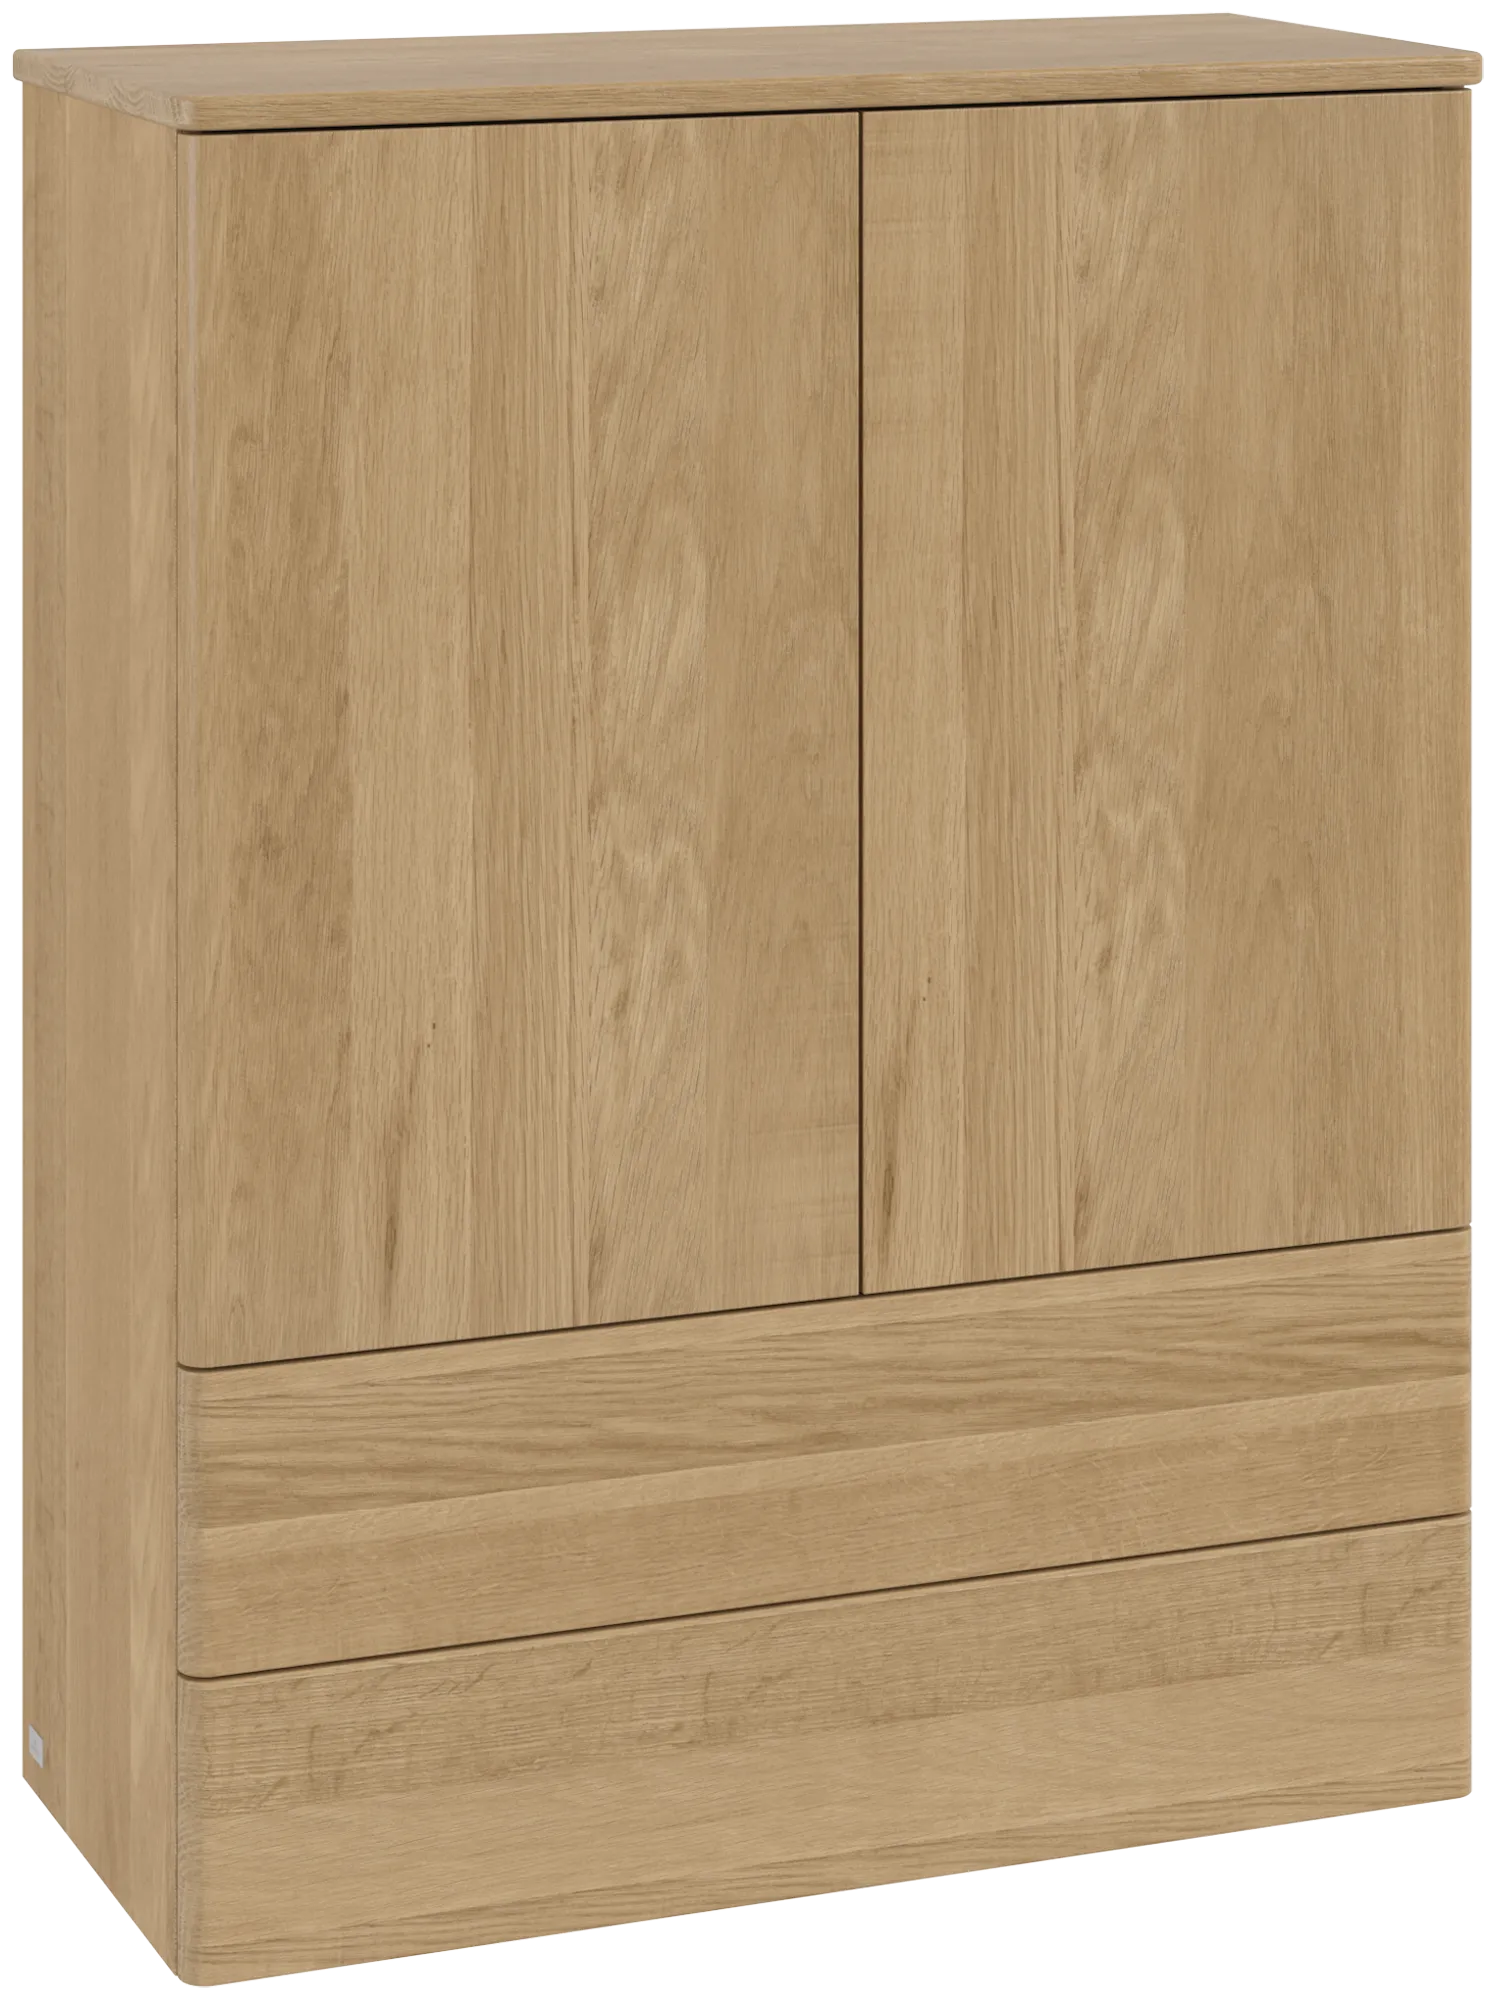 Bild von VILLEROY BOCH Antao Highboard, 2 Türen, 814 x 1039 x 356 mm, Front ohne Struktur, Honey Oak / Honey Oak #K47000HN